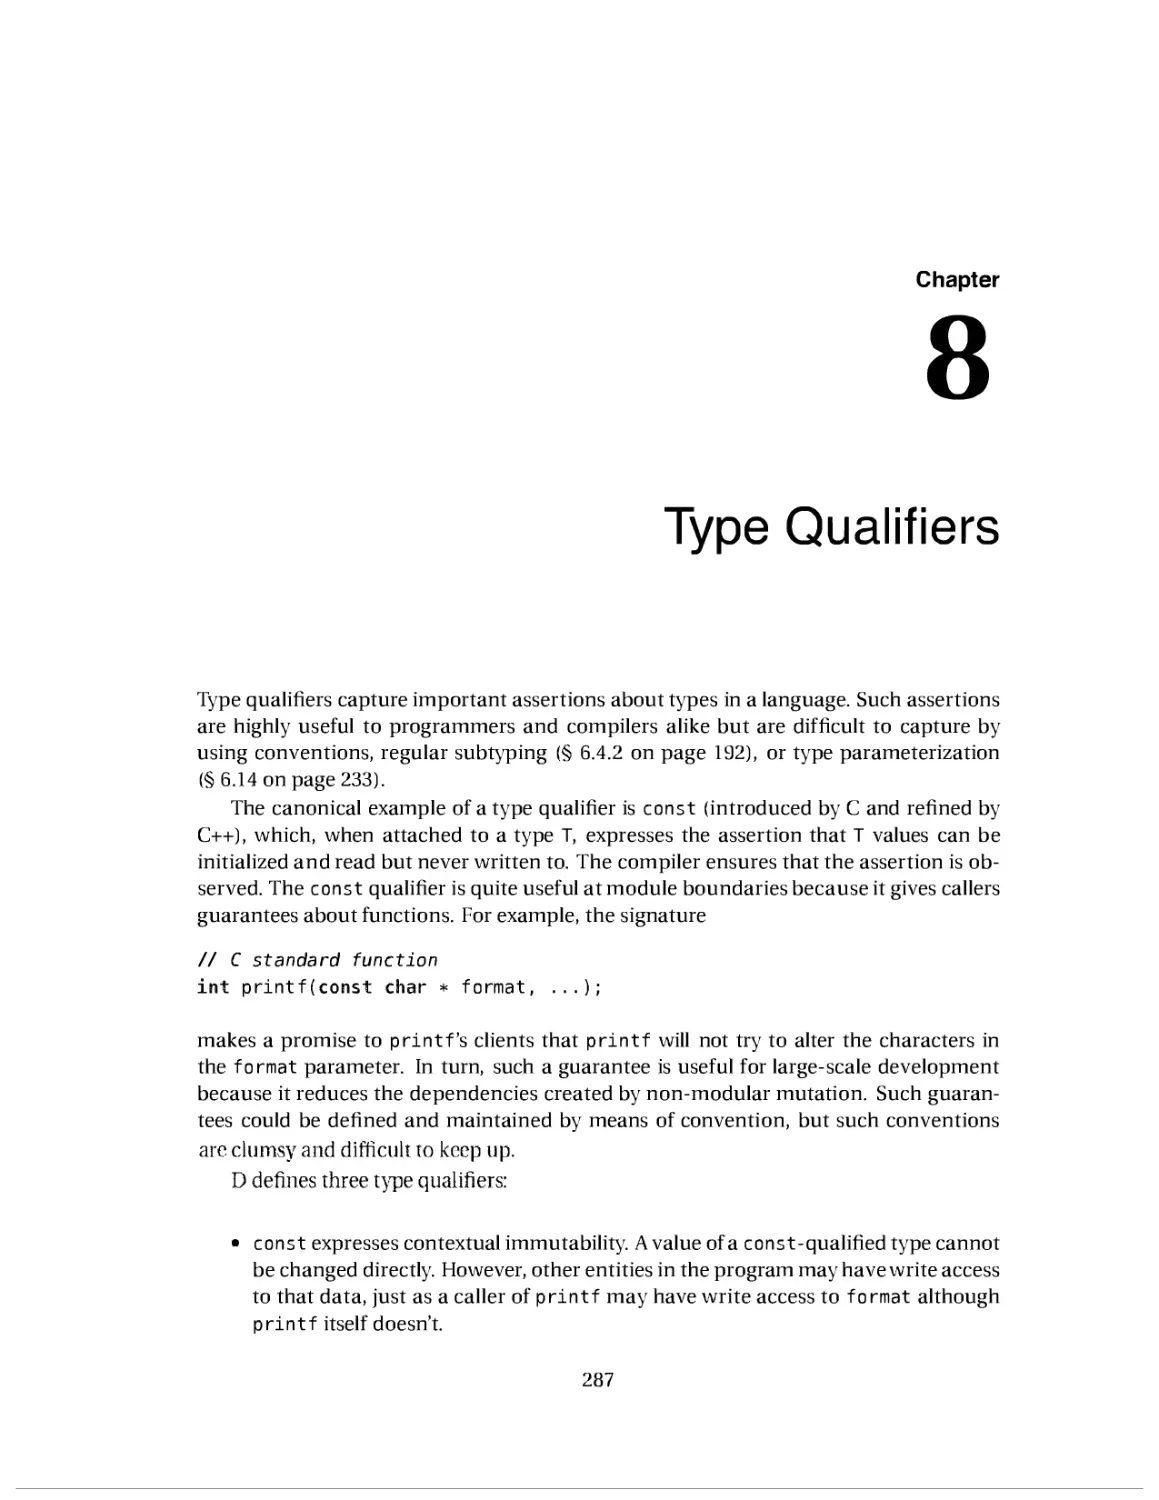 8. Type Qualifiers